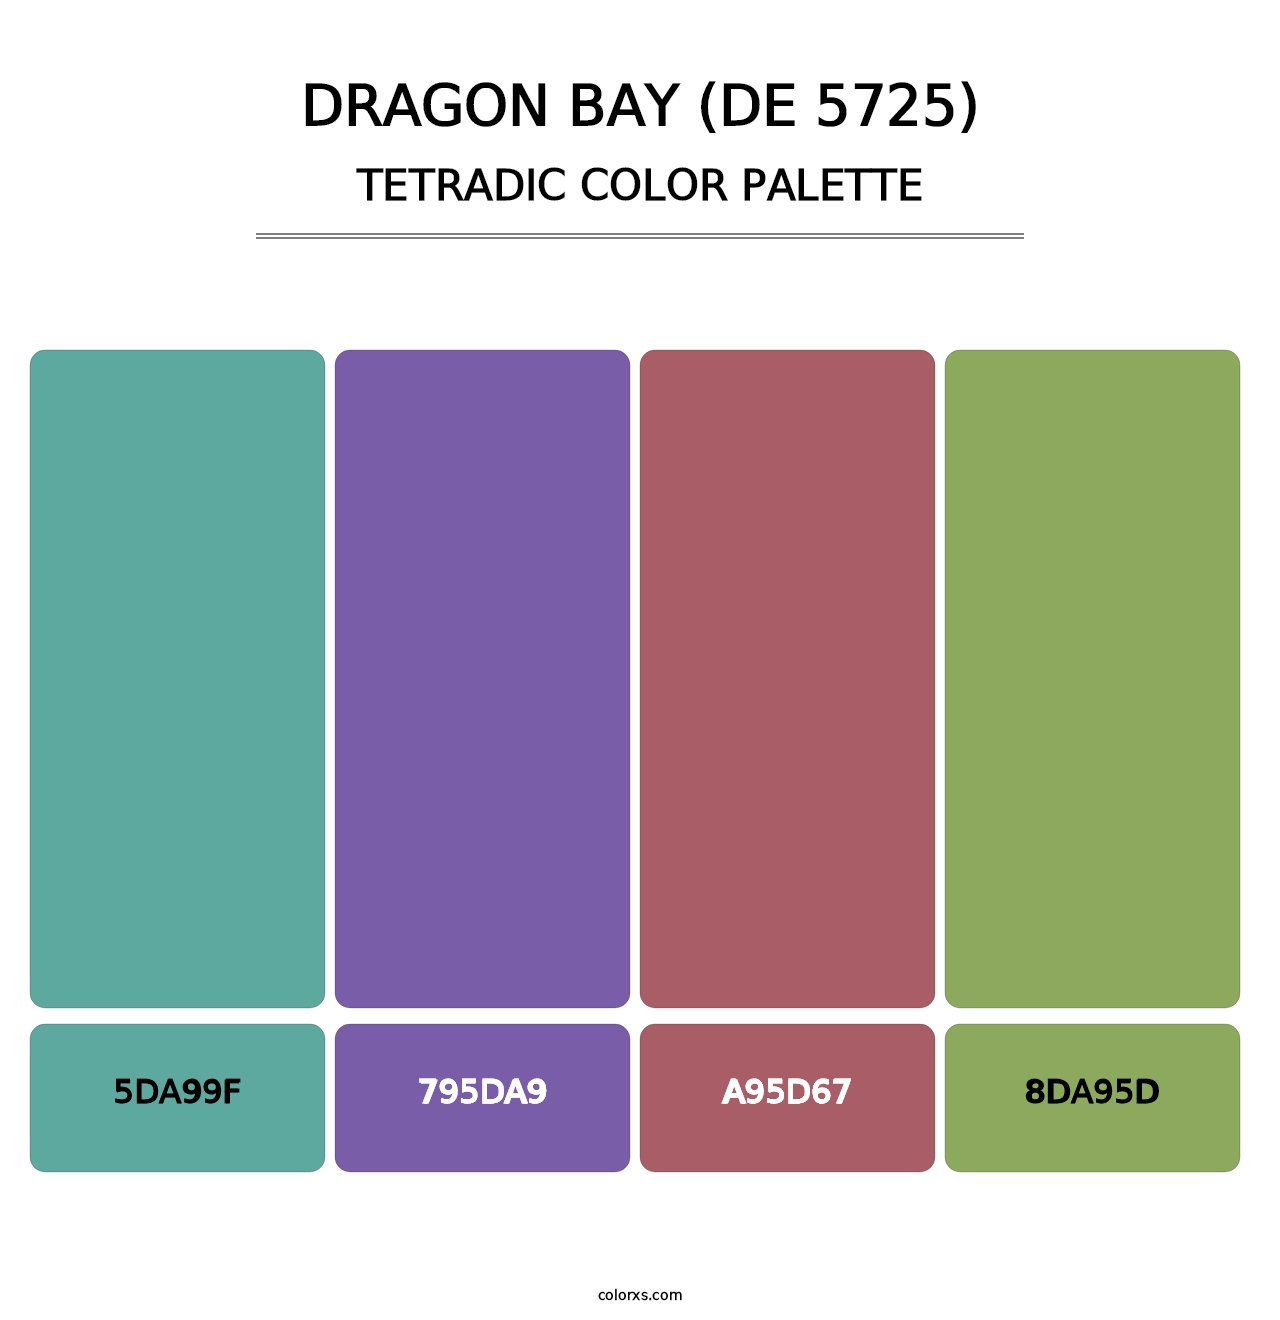 Dragon Bay (DE 5725) - Tetradic Color Palette